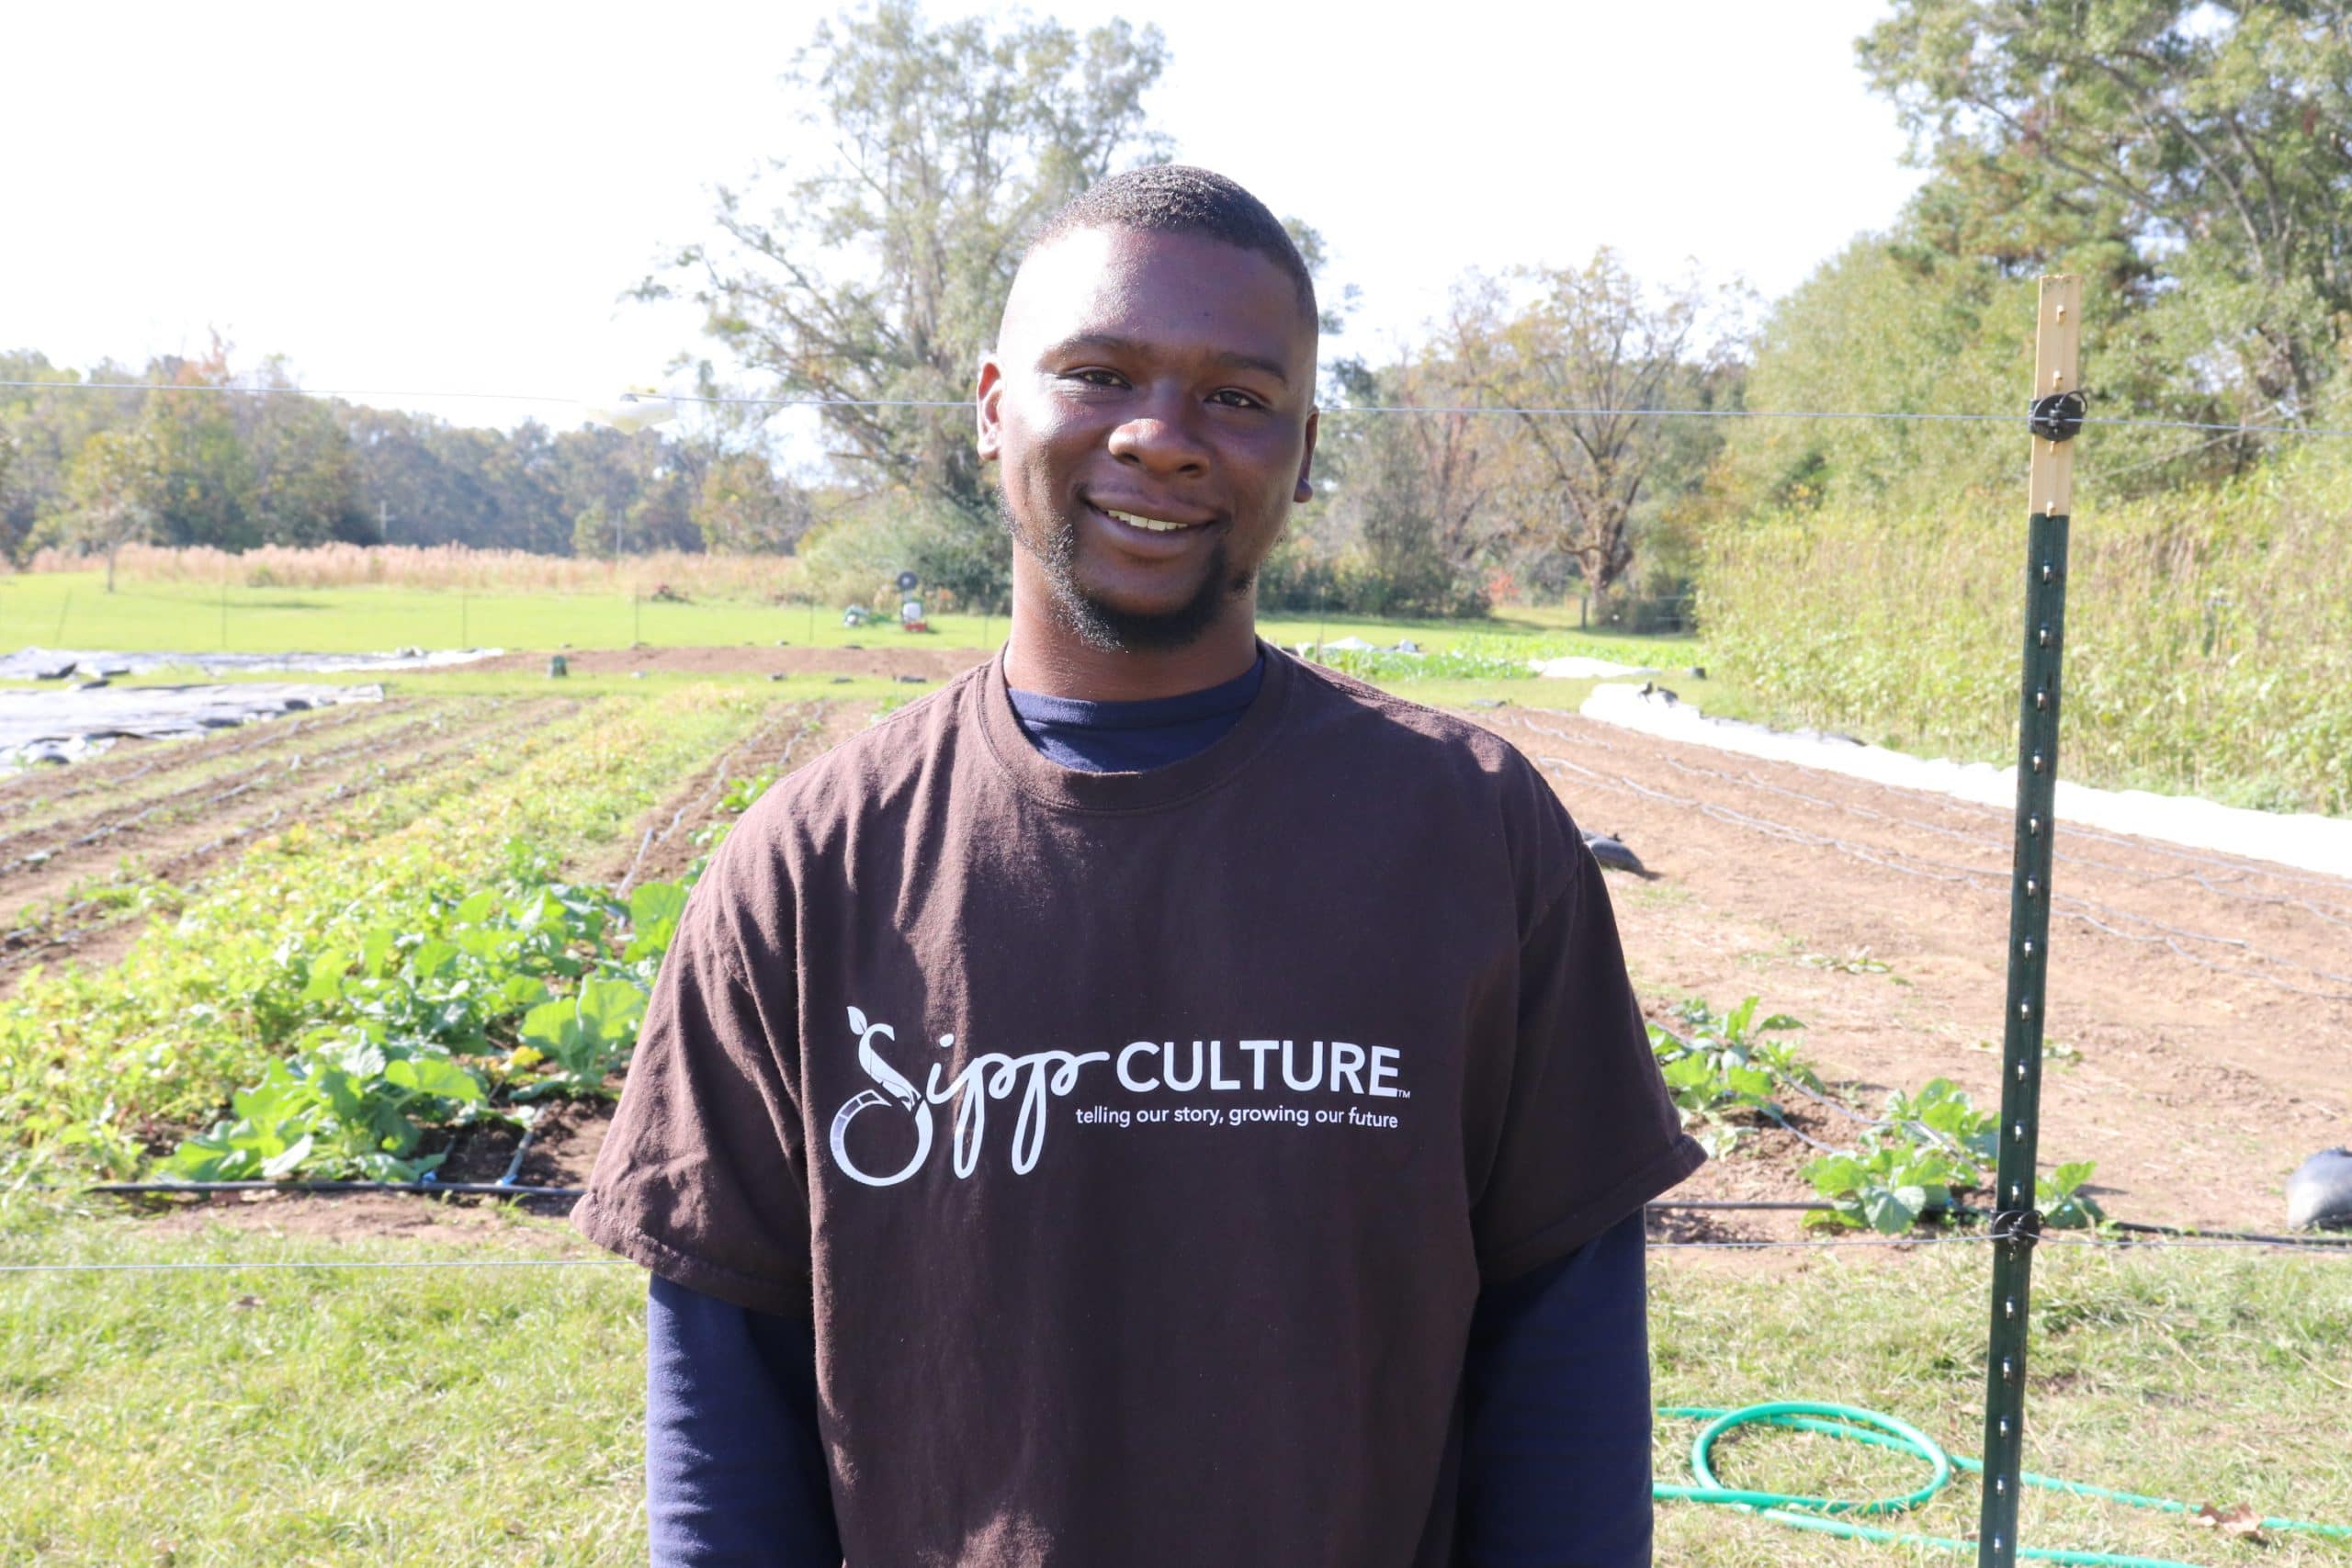 Young Black Man at Community Farm Smiling